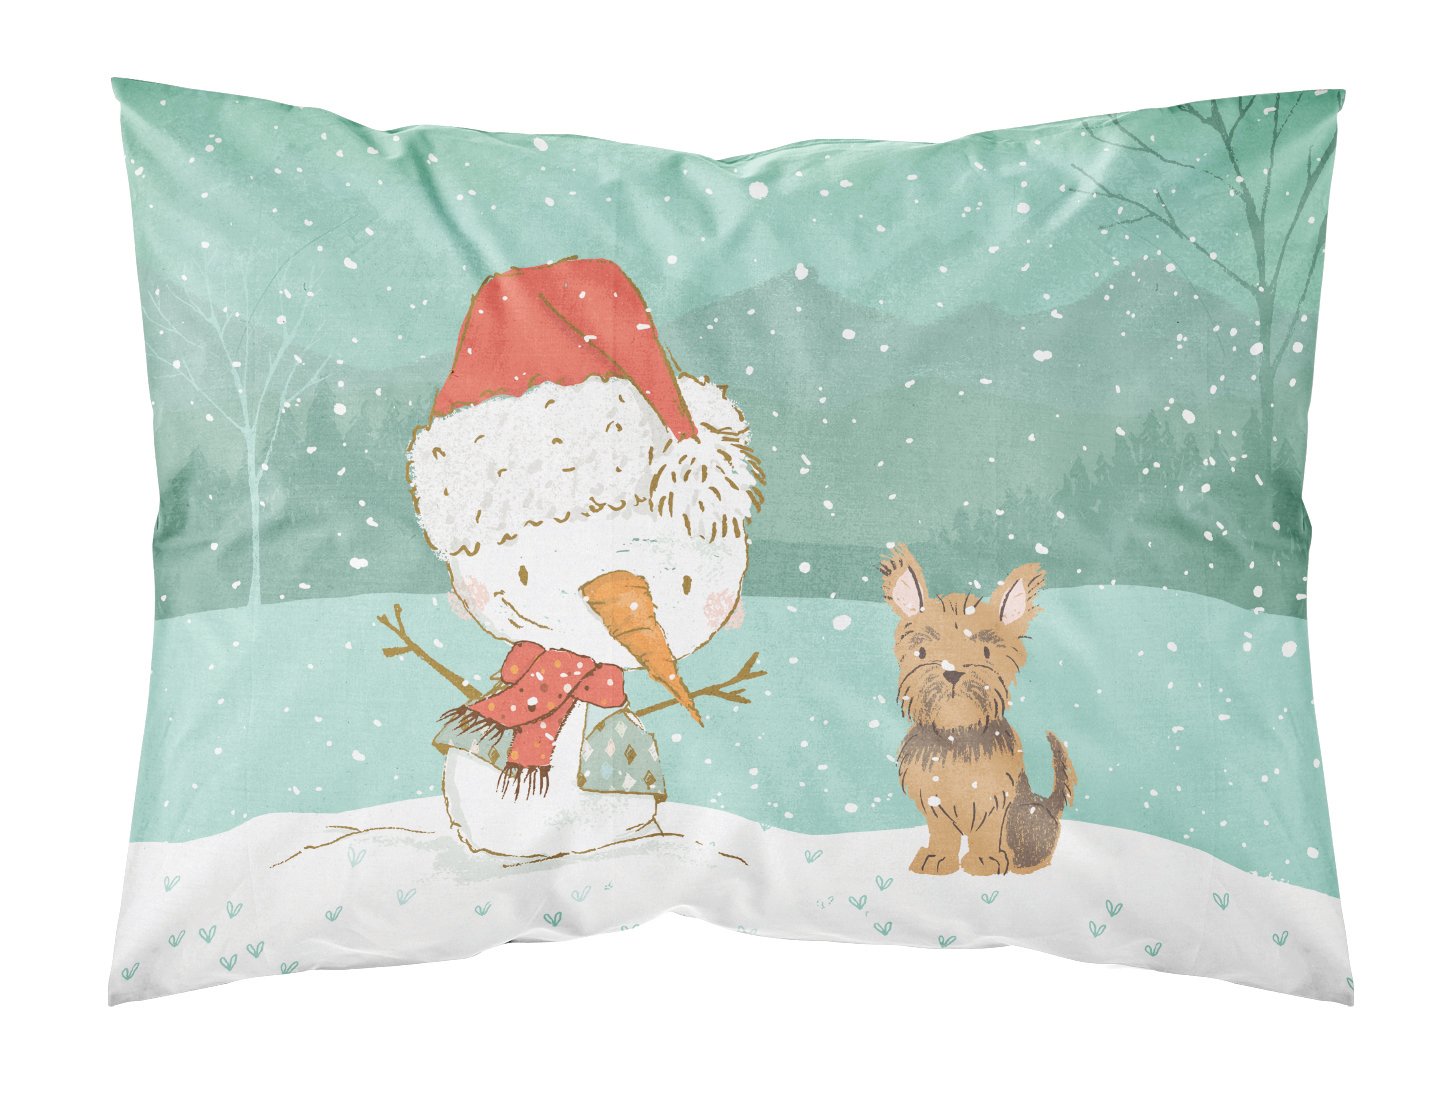 Yorkie Cropped Ears Snowman Christmas Fabric Standard Pillowcase CK2098PILLOWCASE by Caroline's Treasures